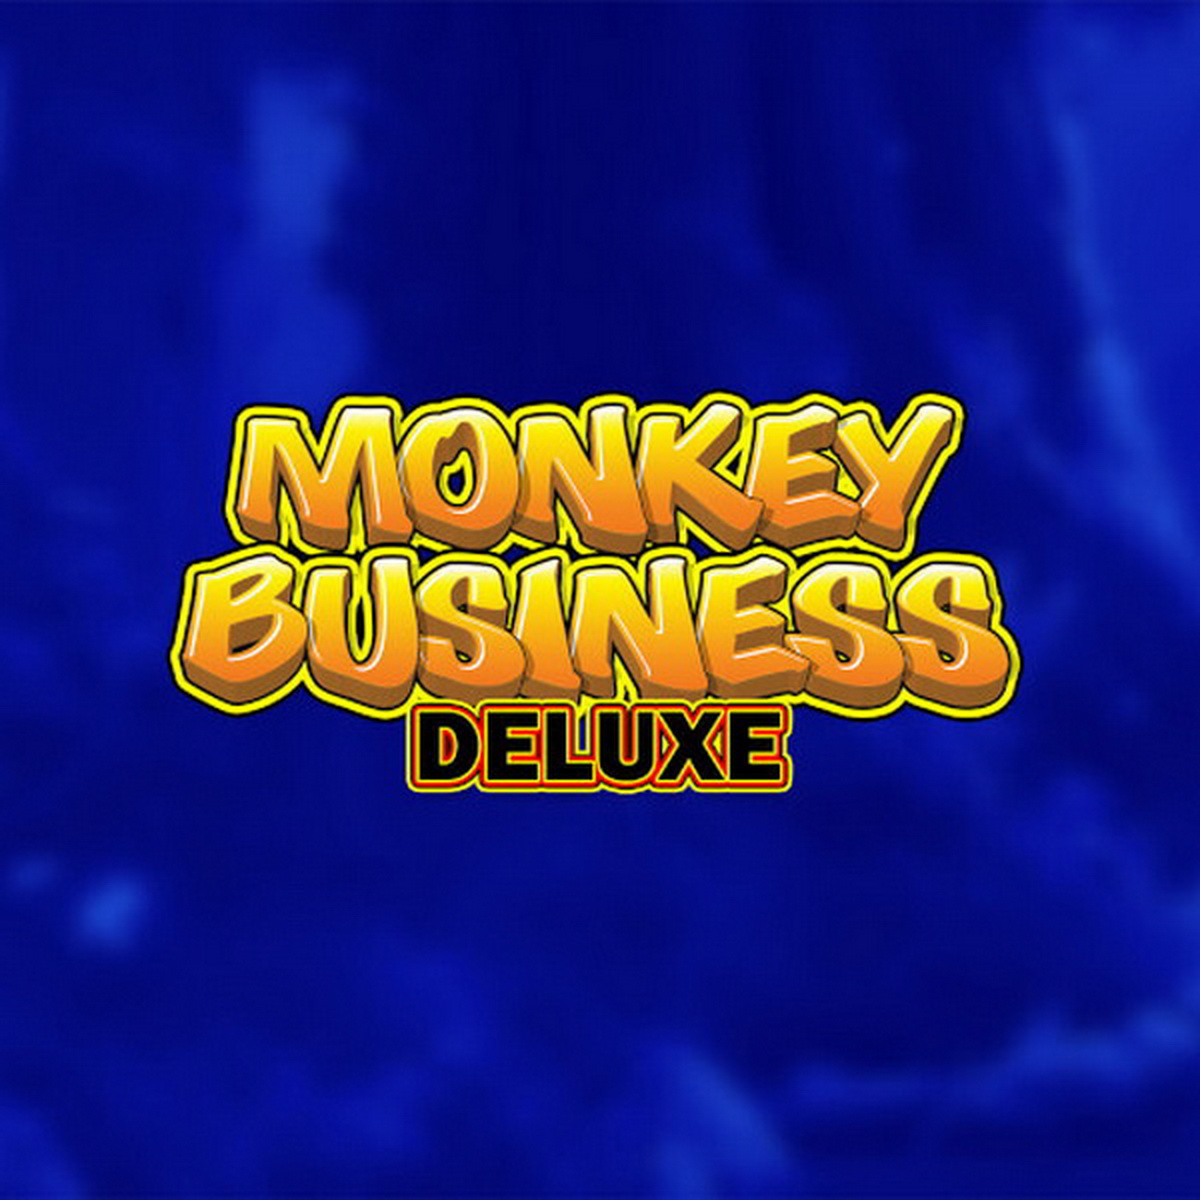 Monkey Business Deluxe demo